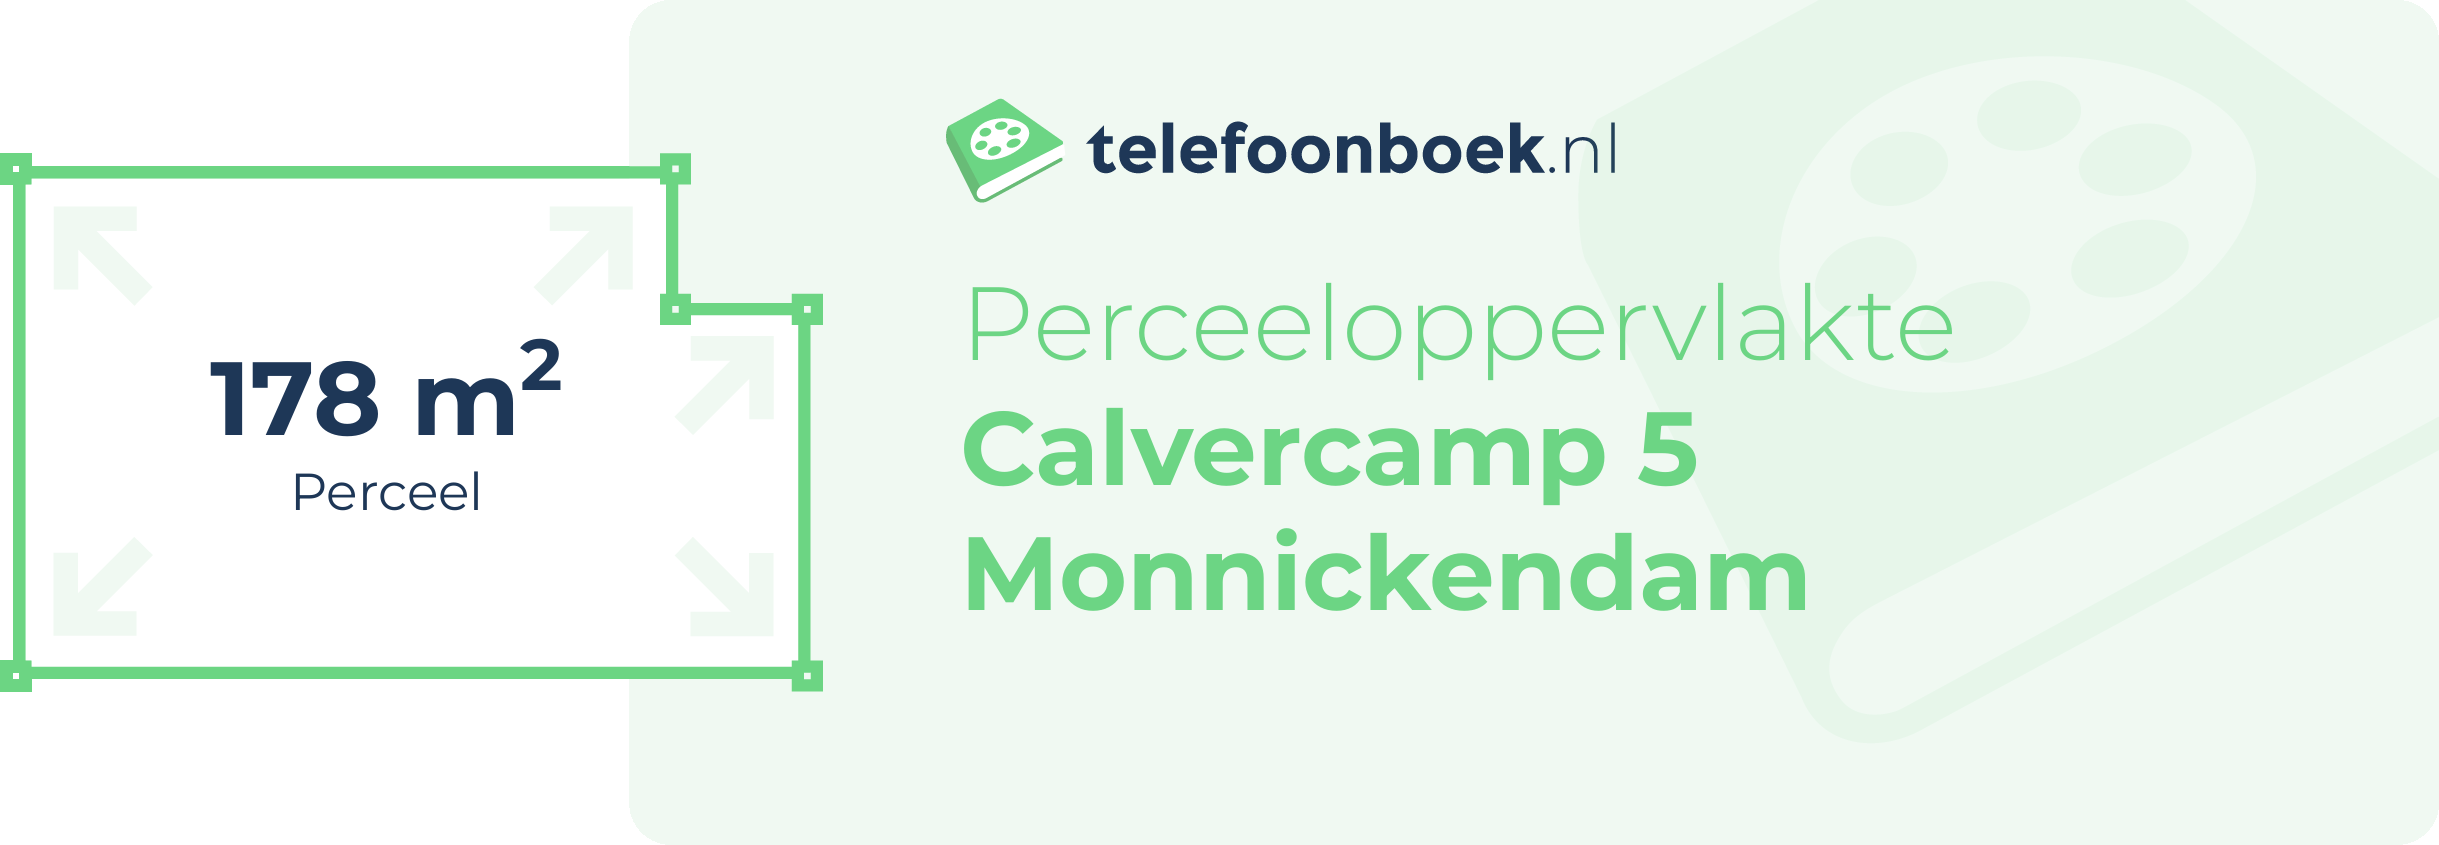 Perceeloppervlakte Calvercamp 5 Monnickendam